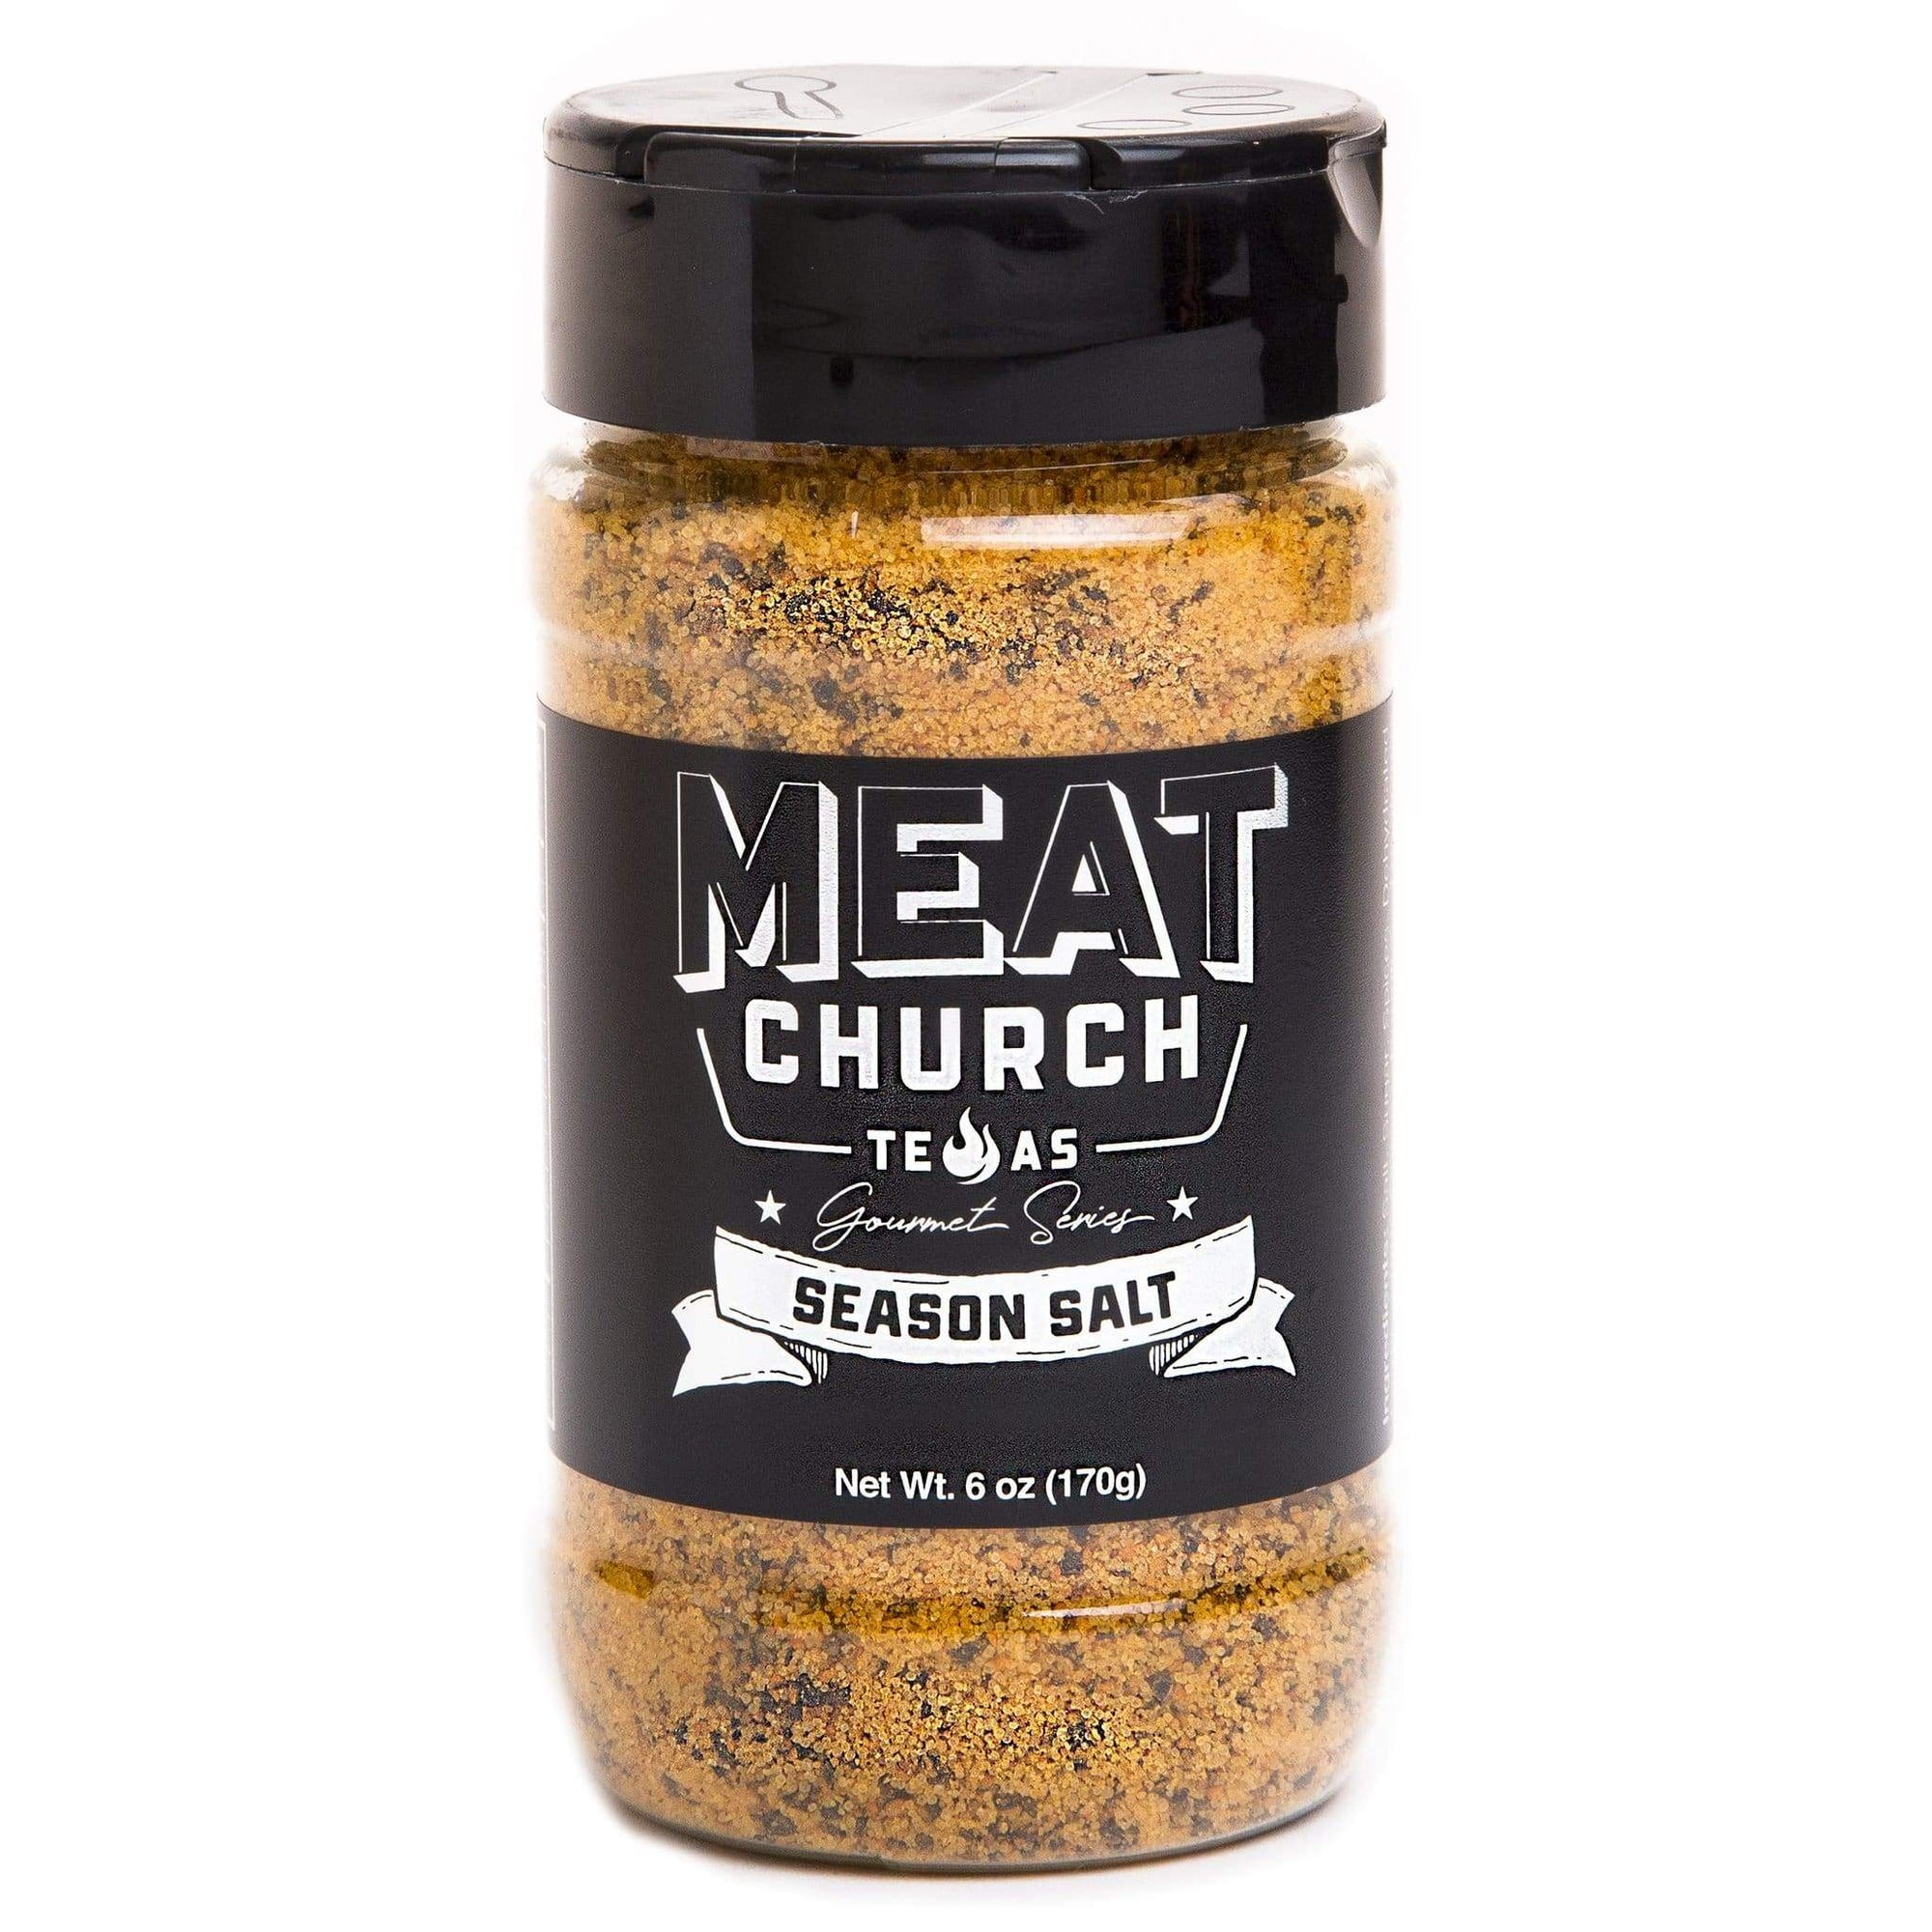 Meat Church Spices & Seasonings Meat Church Season Salt 6 oz